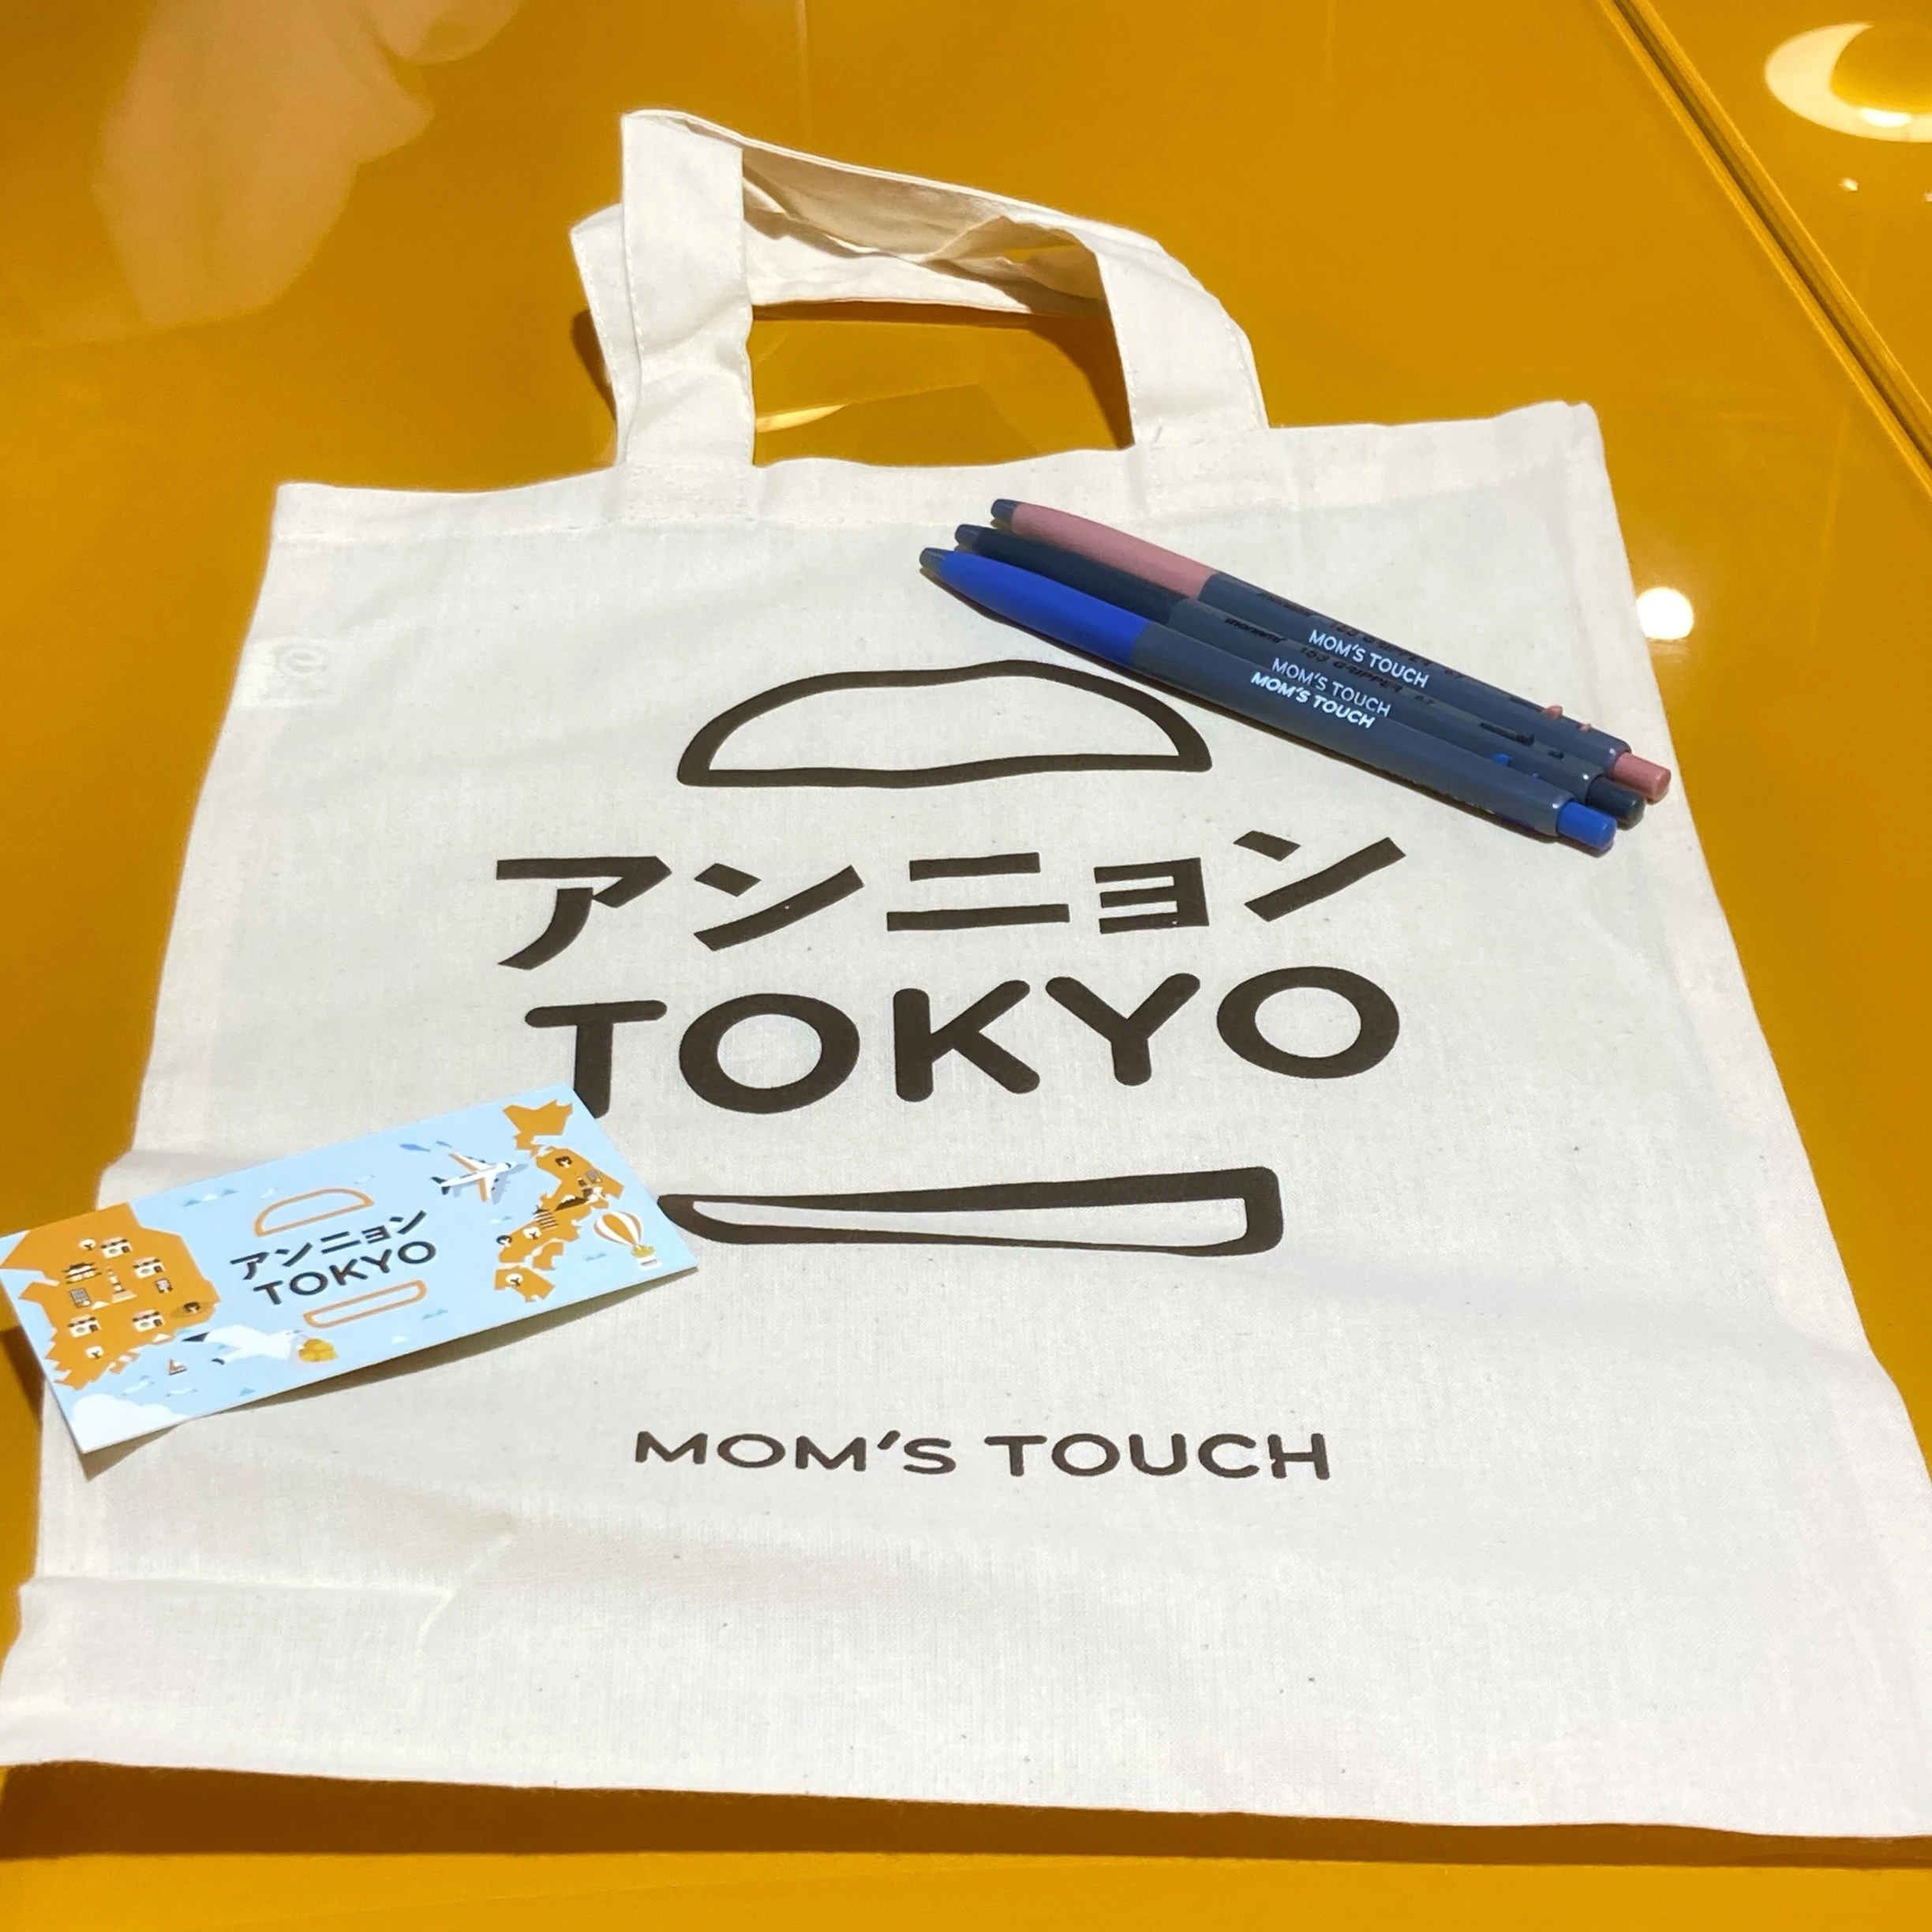 「MOM&#039;s TOUCH TOKYO POP UP STORE」予約特典。「アンニョンTOKYO」と書かれたトートバッグとペン３本。